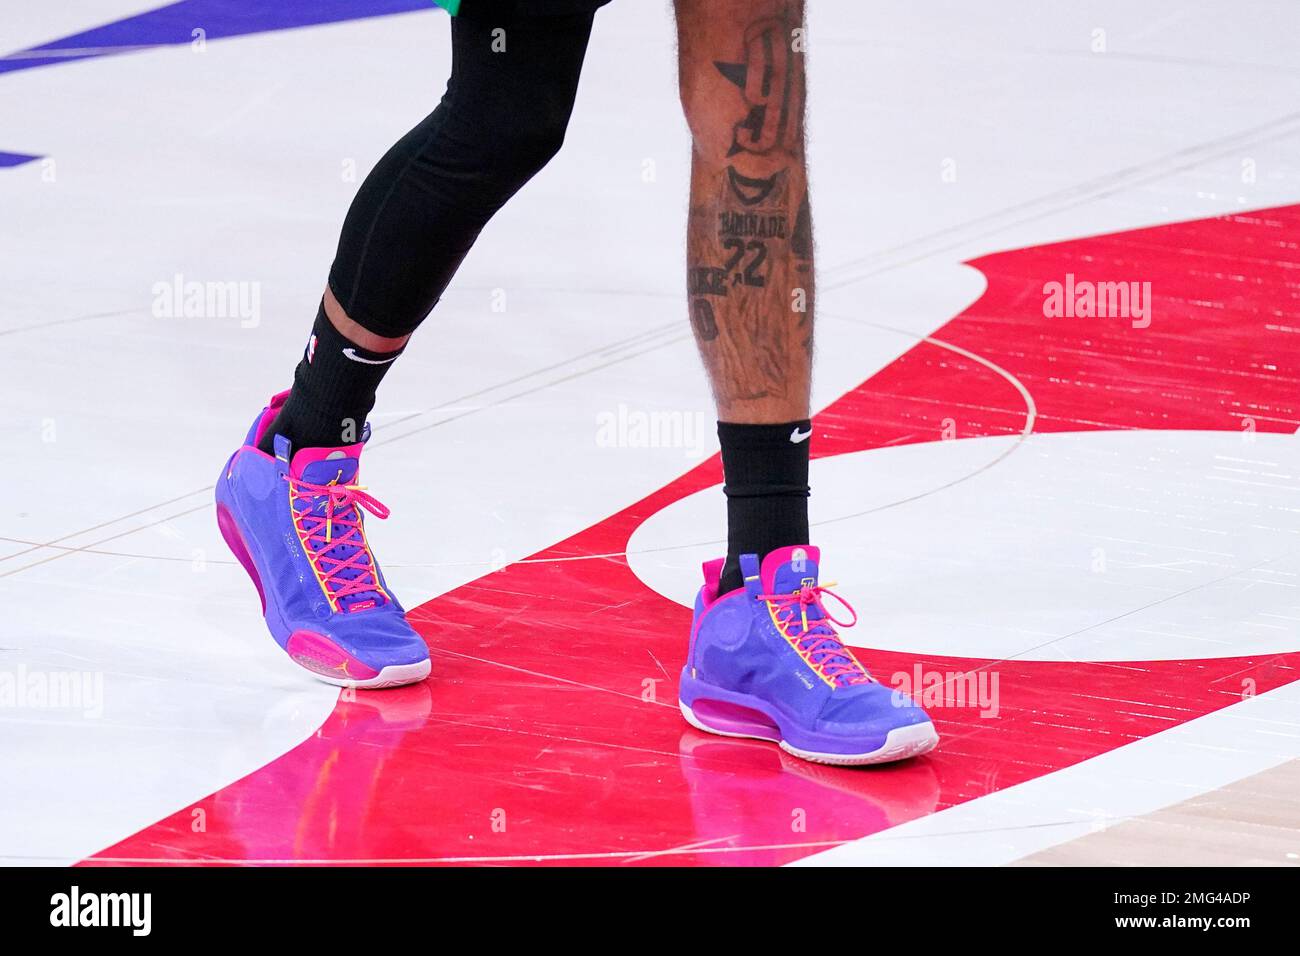 The shoes of Boston Celtics' Jayson Tatum are seen as he walks on